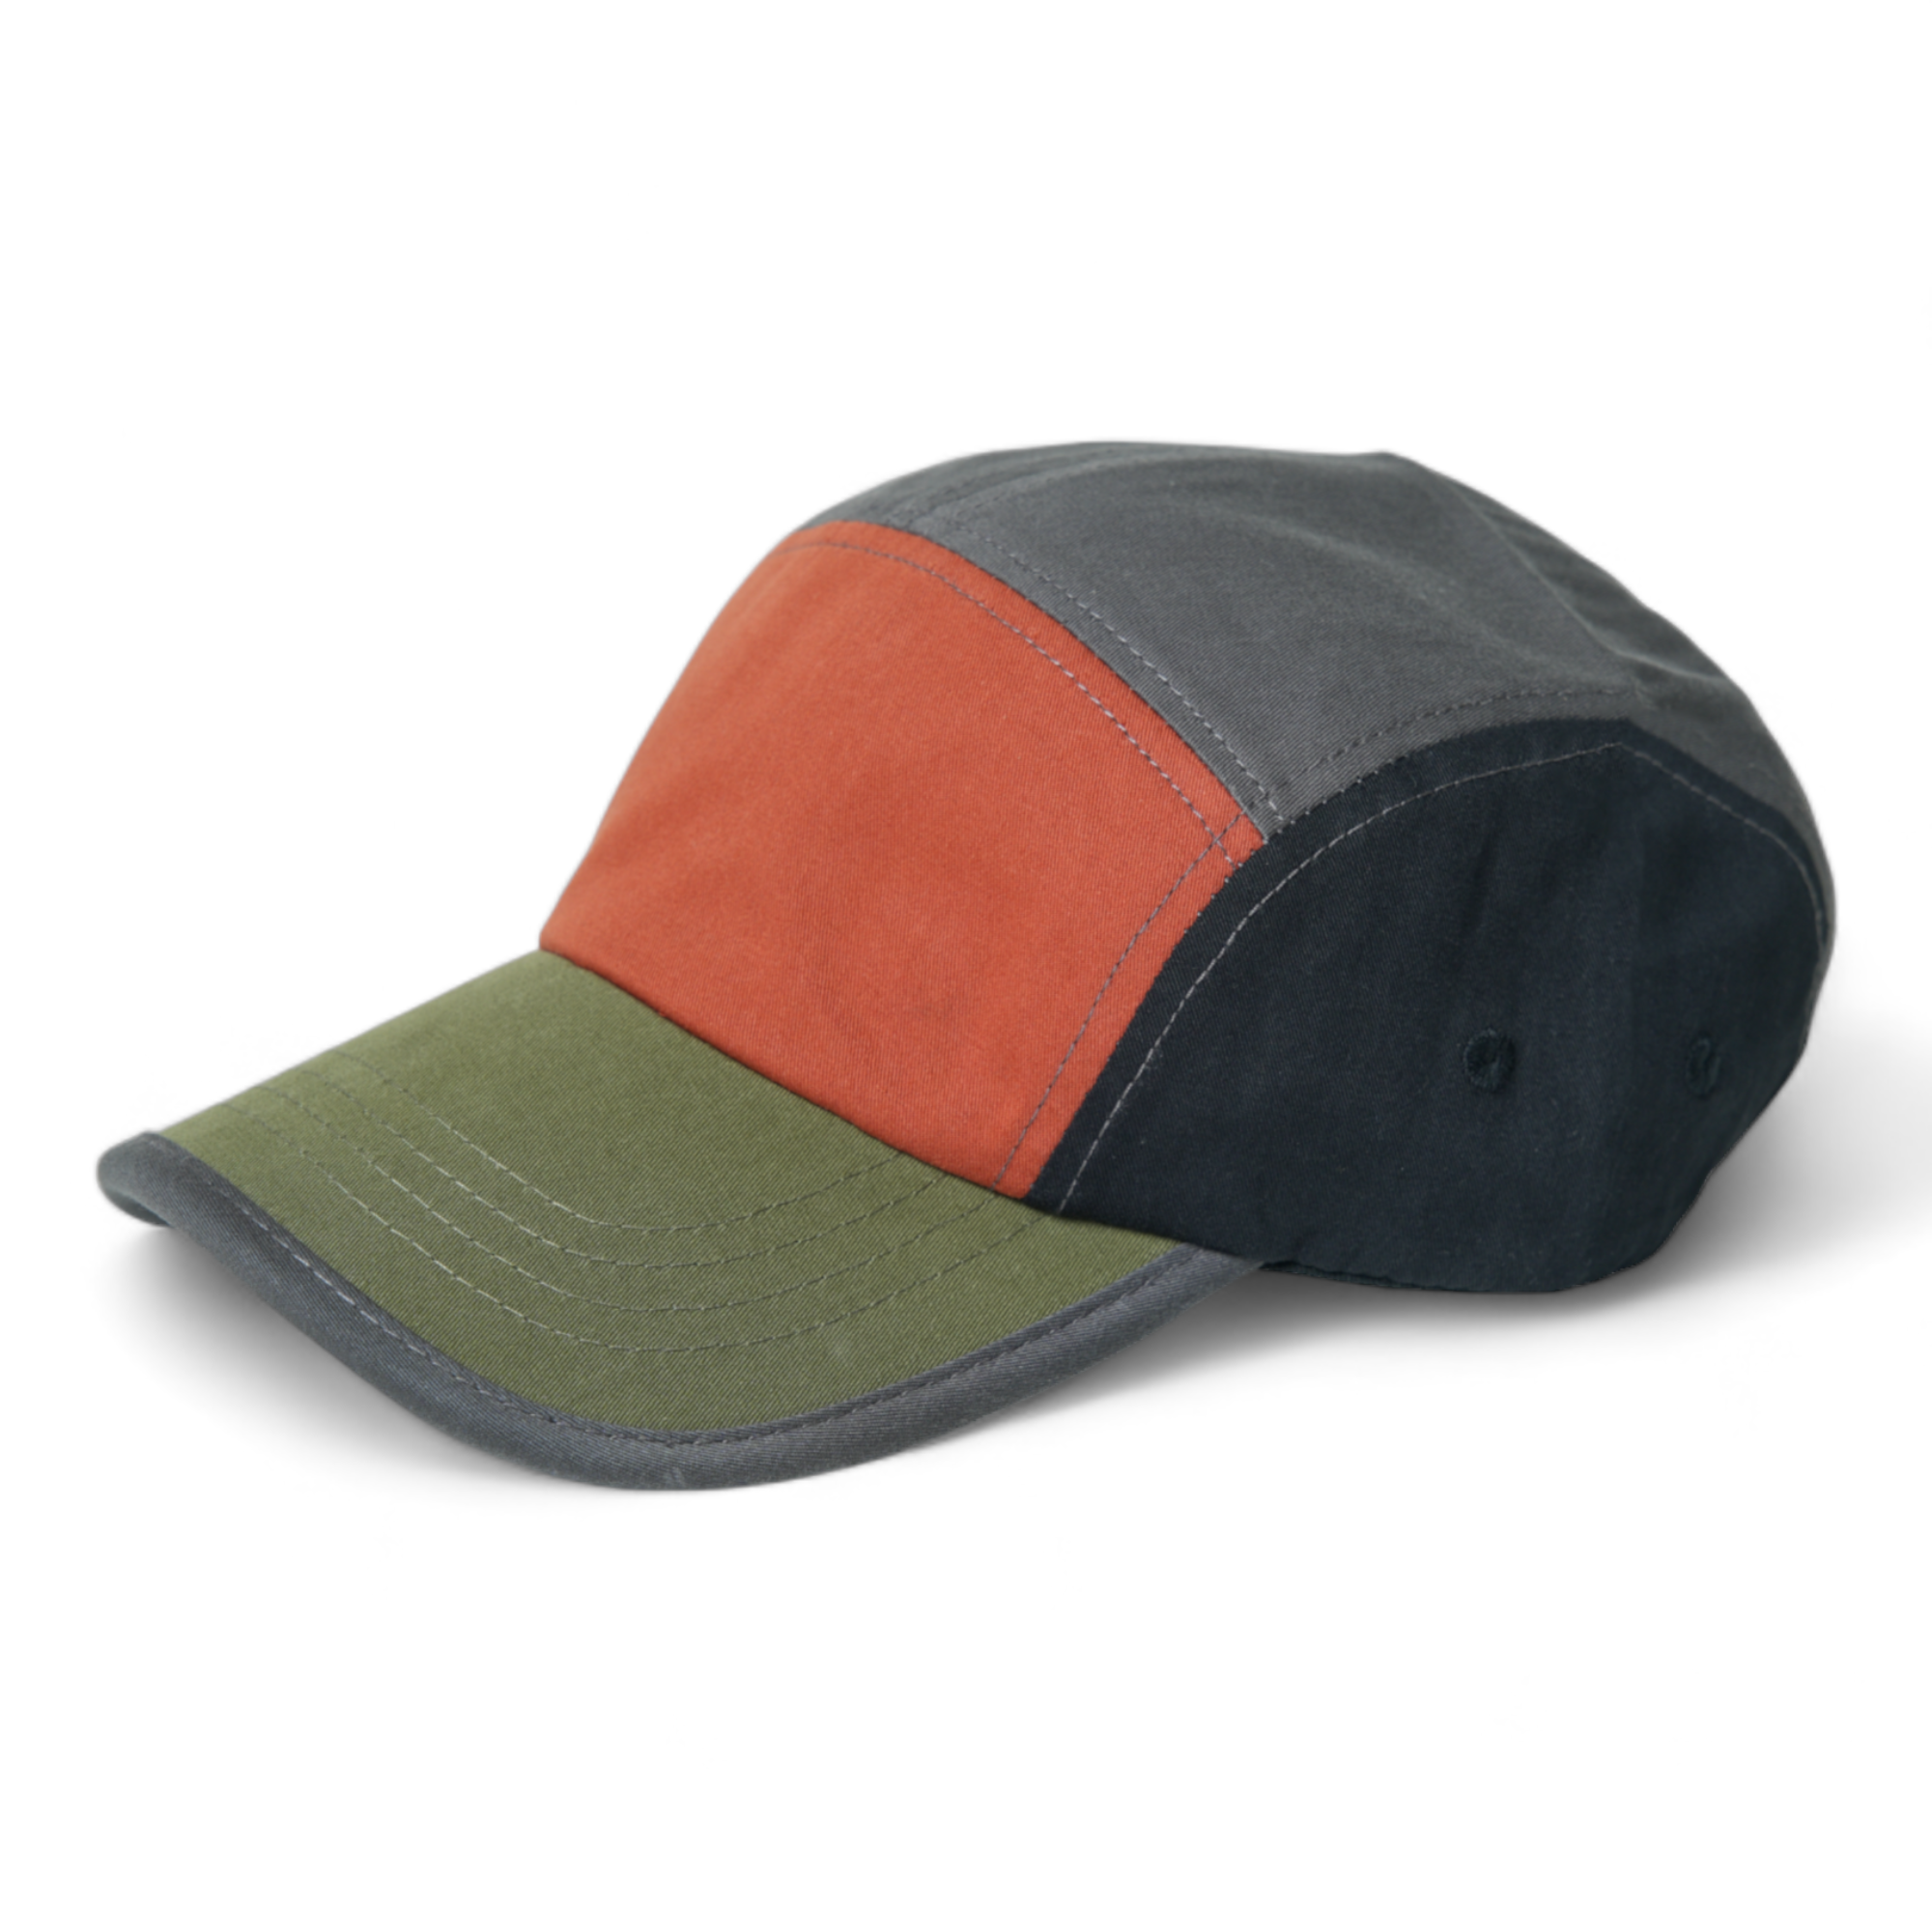 Chokore Colorblock Retro Sports Cap( Green, Black, & Orange)